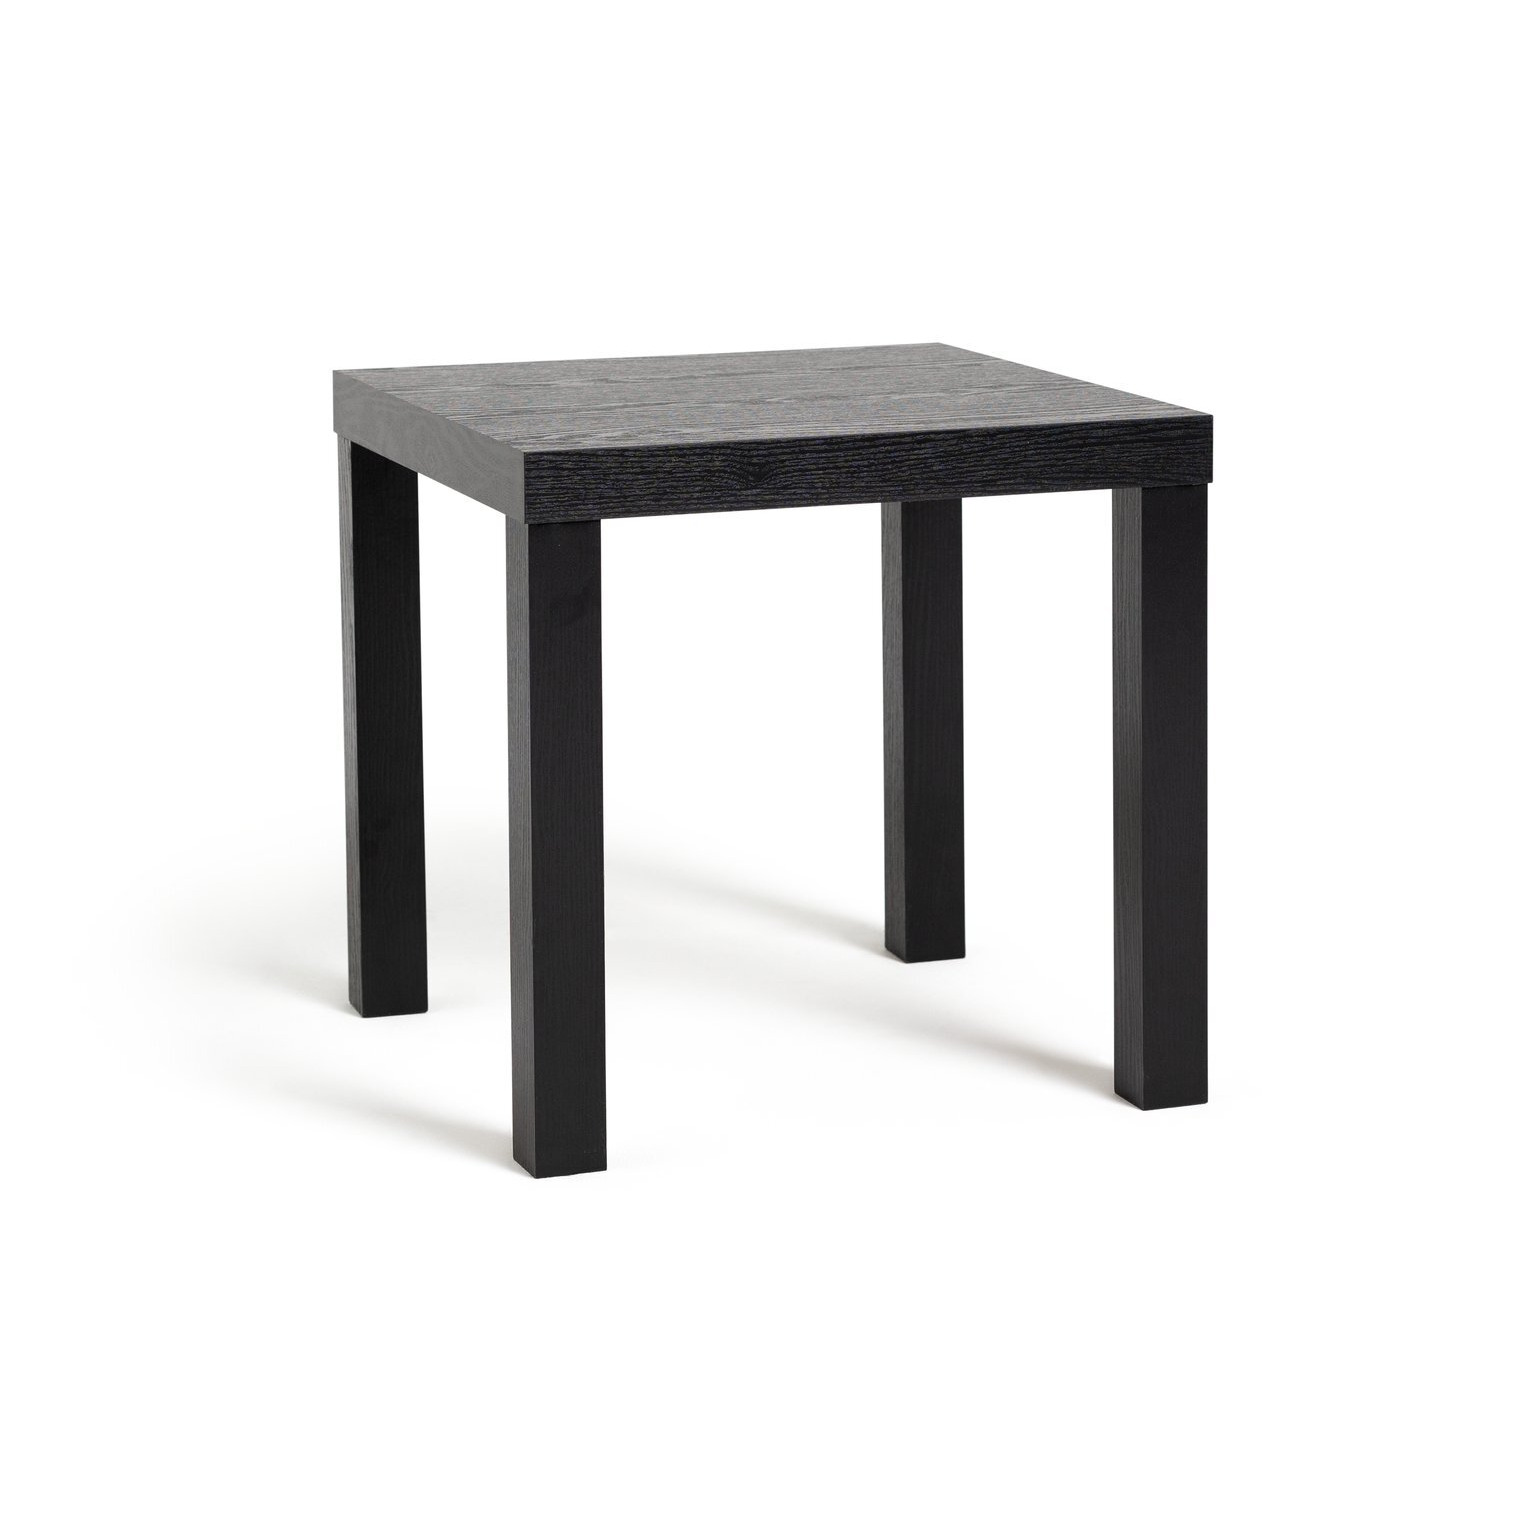 Argos Home End Table - Black - image 1